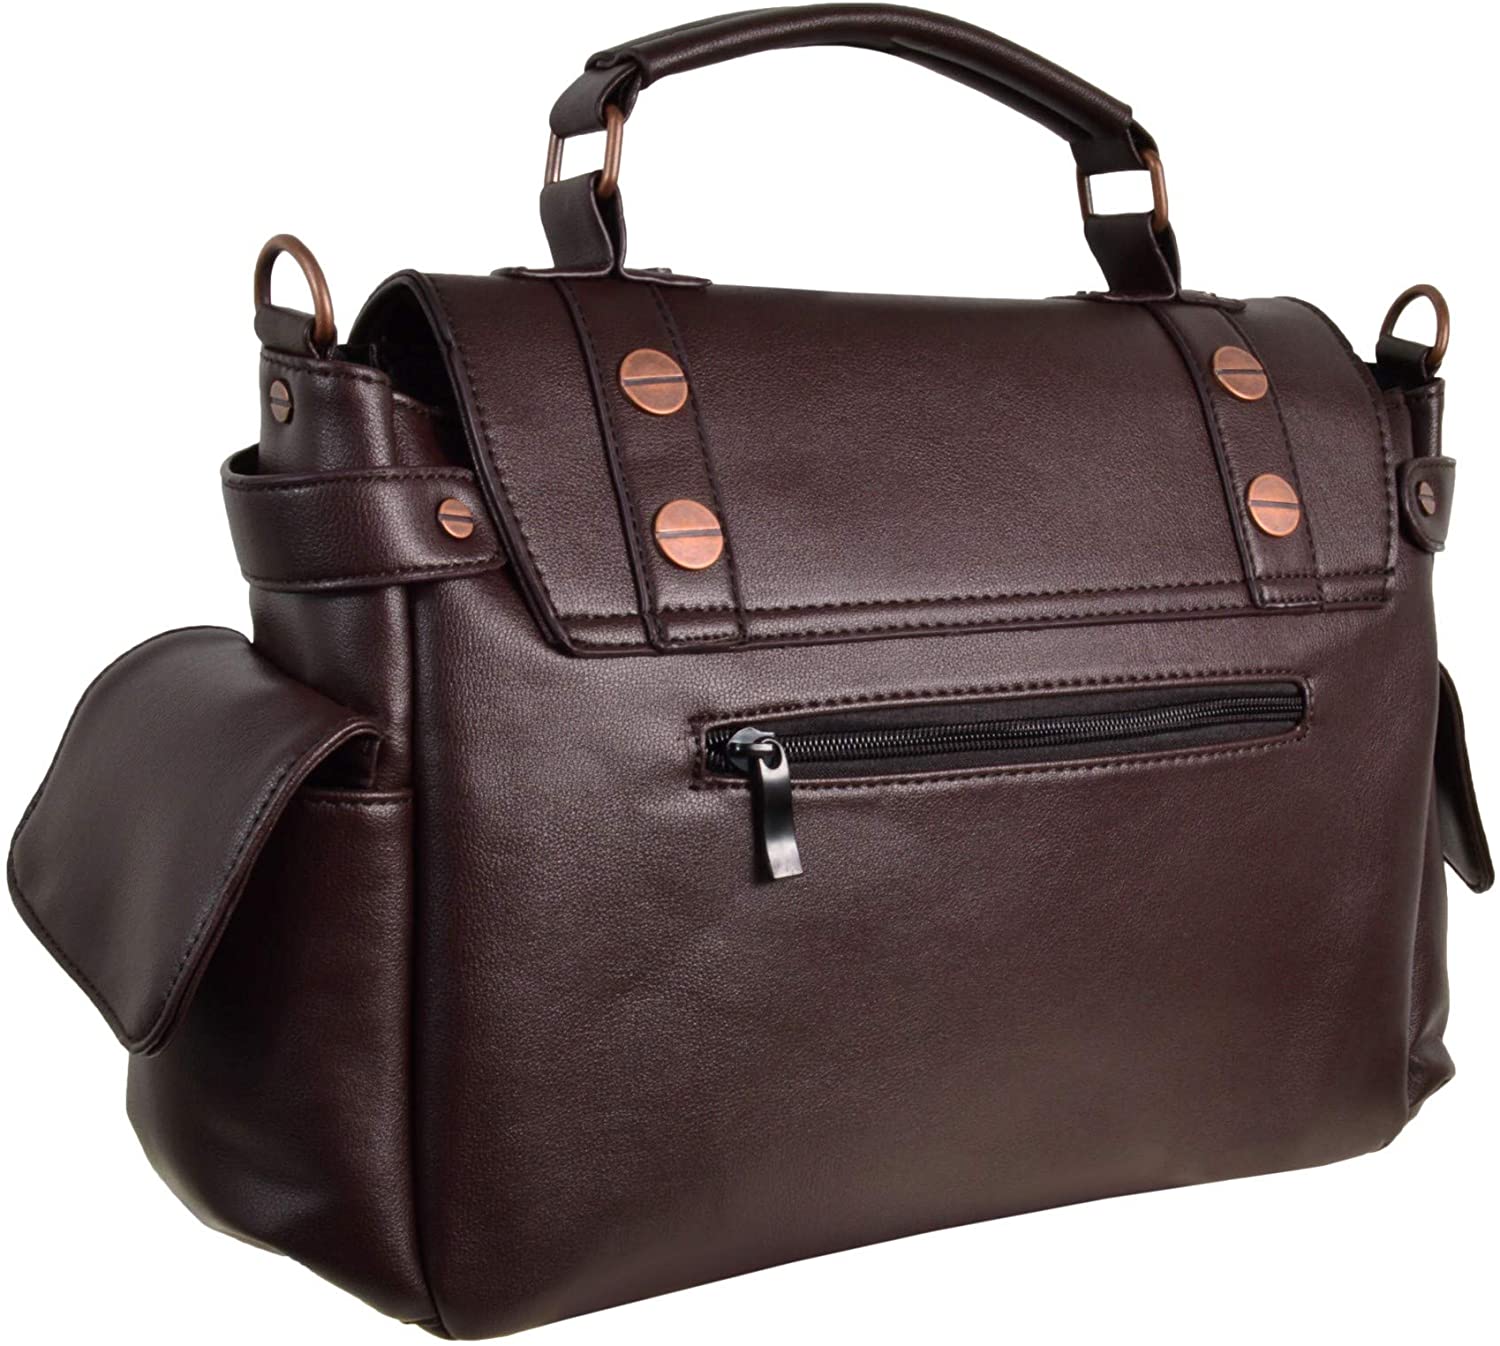 Lost Queen Brown Steampunk Handbag With Copper Details